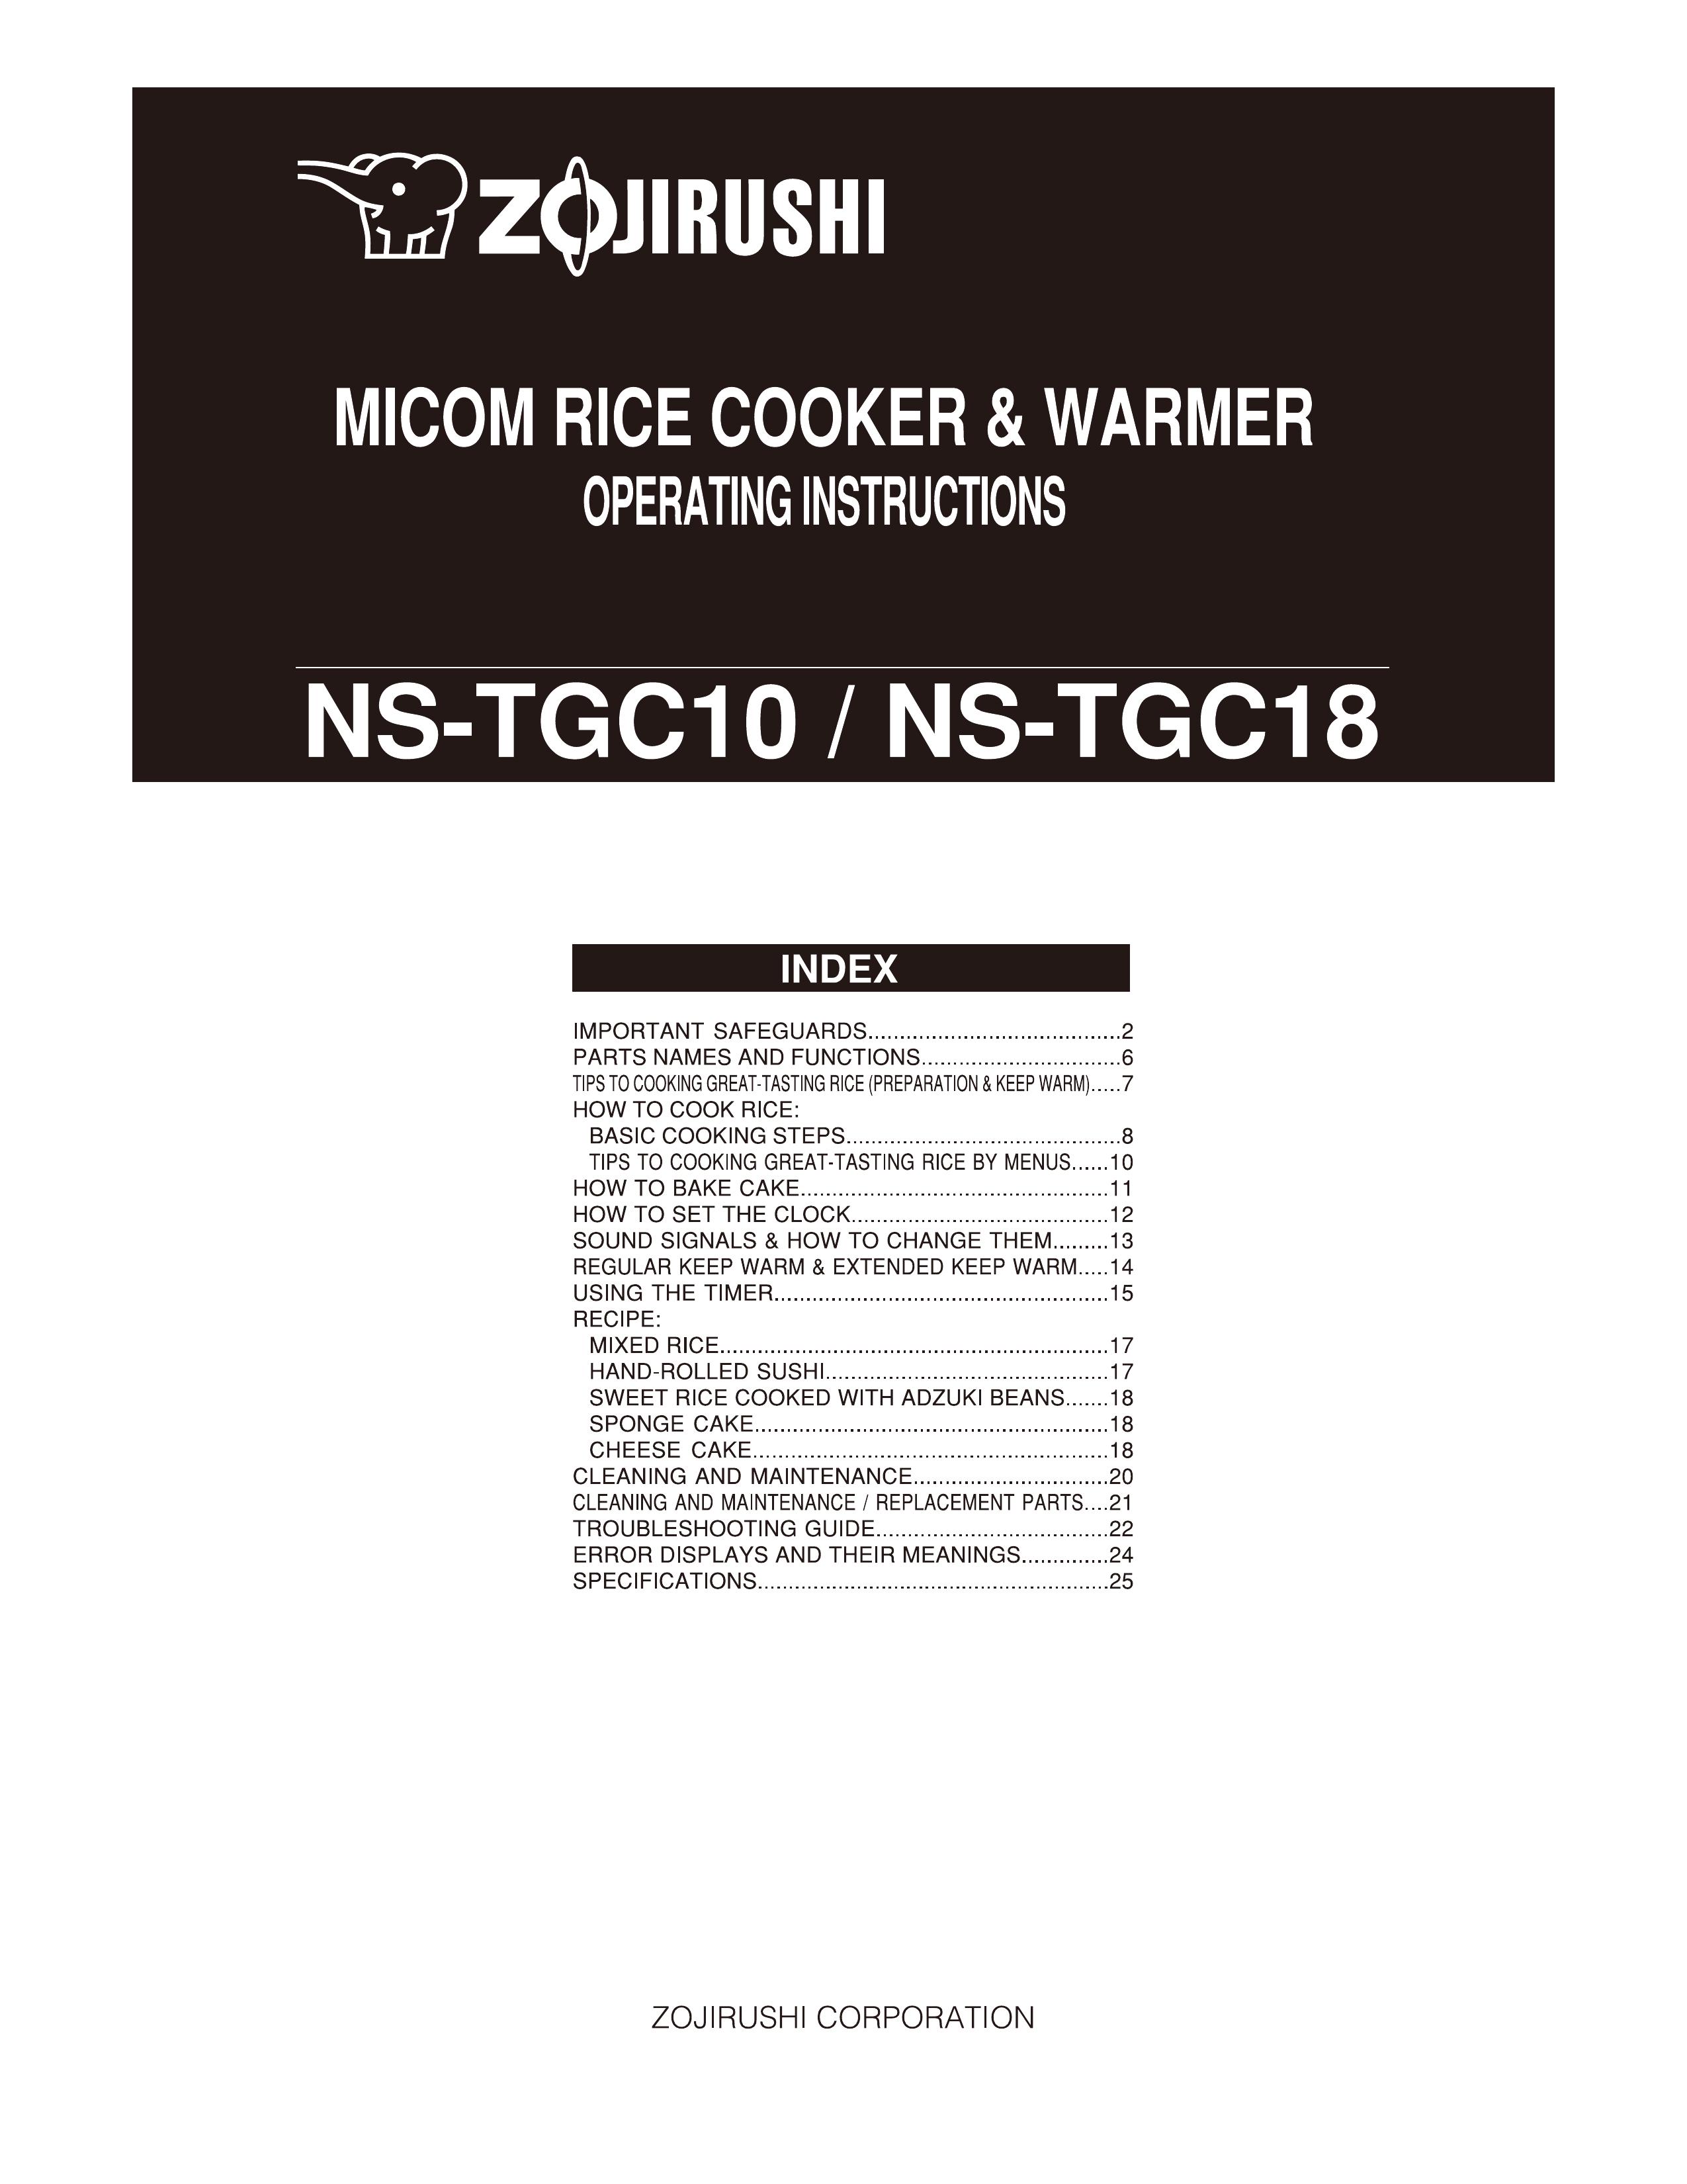 Zojirushi NS-TGC10 Rice Cooker User Manual